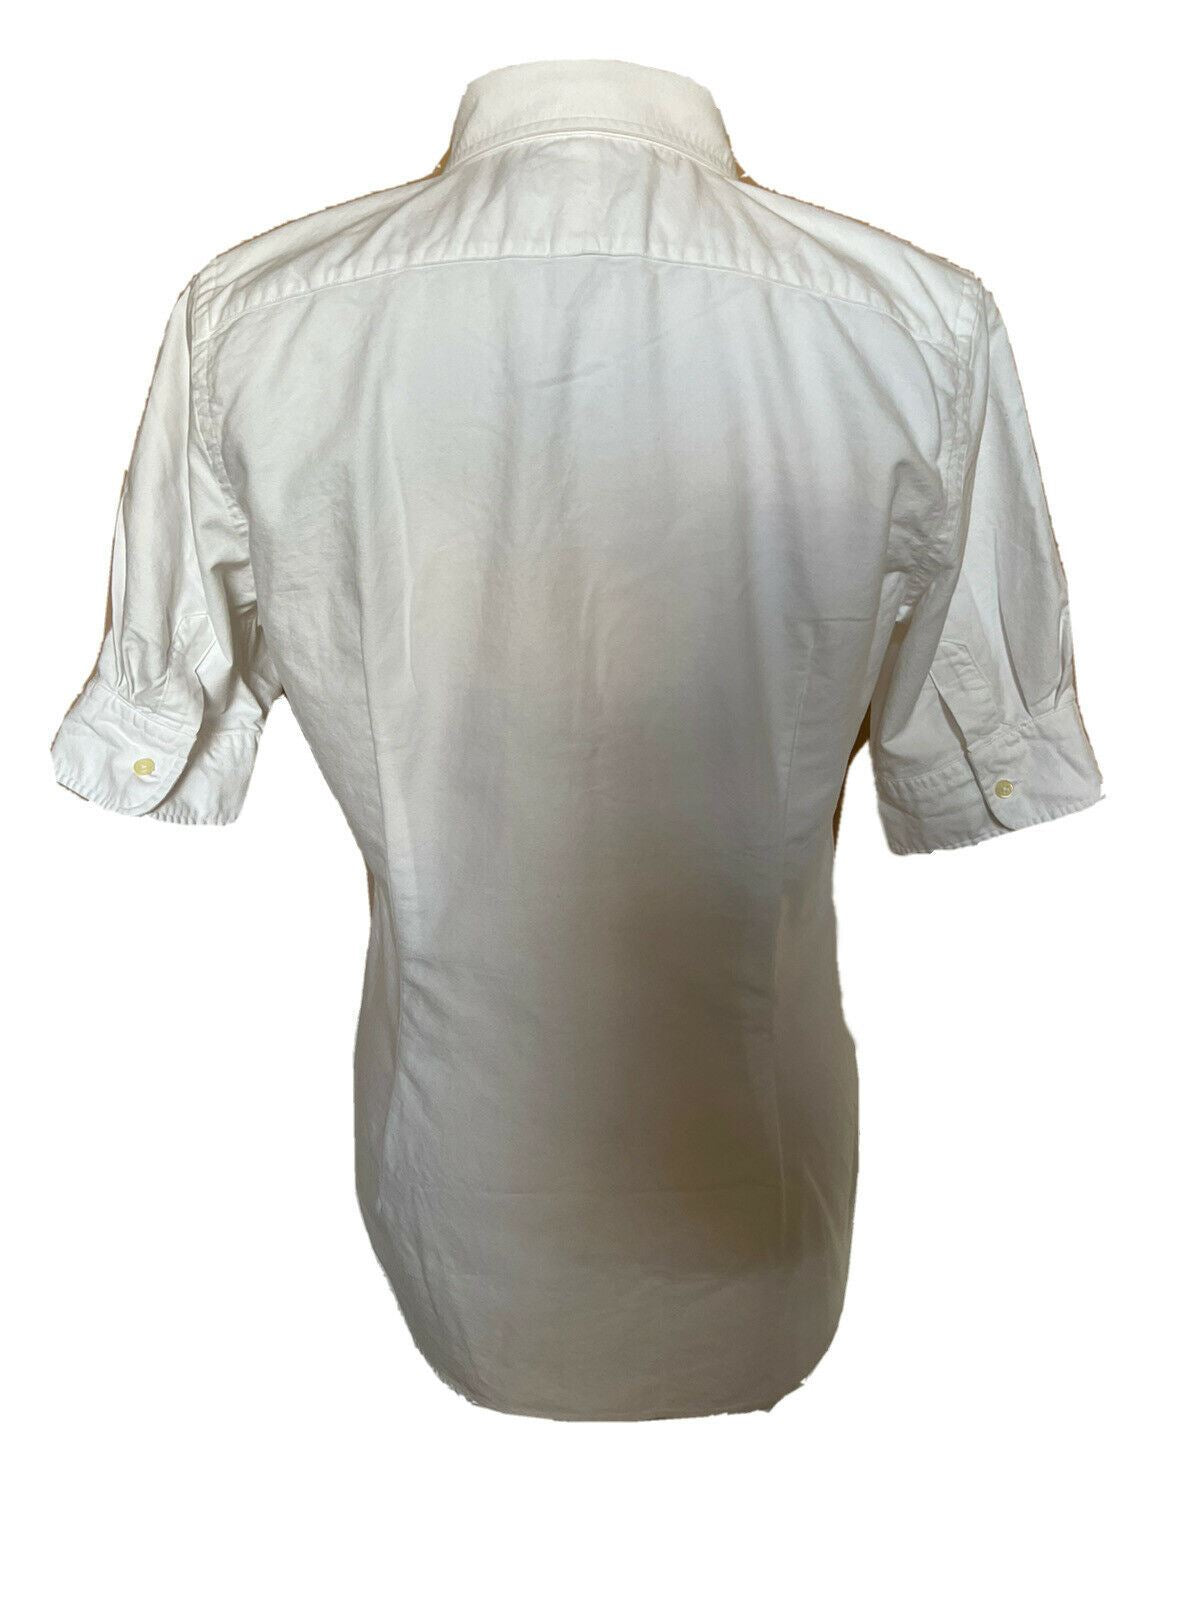 NWT $85 Ralph Lauren Men's White Short Sleeve Dress Shirt Large